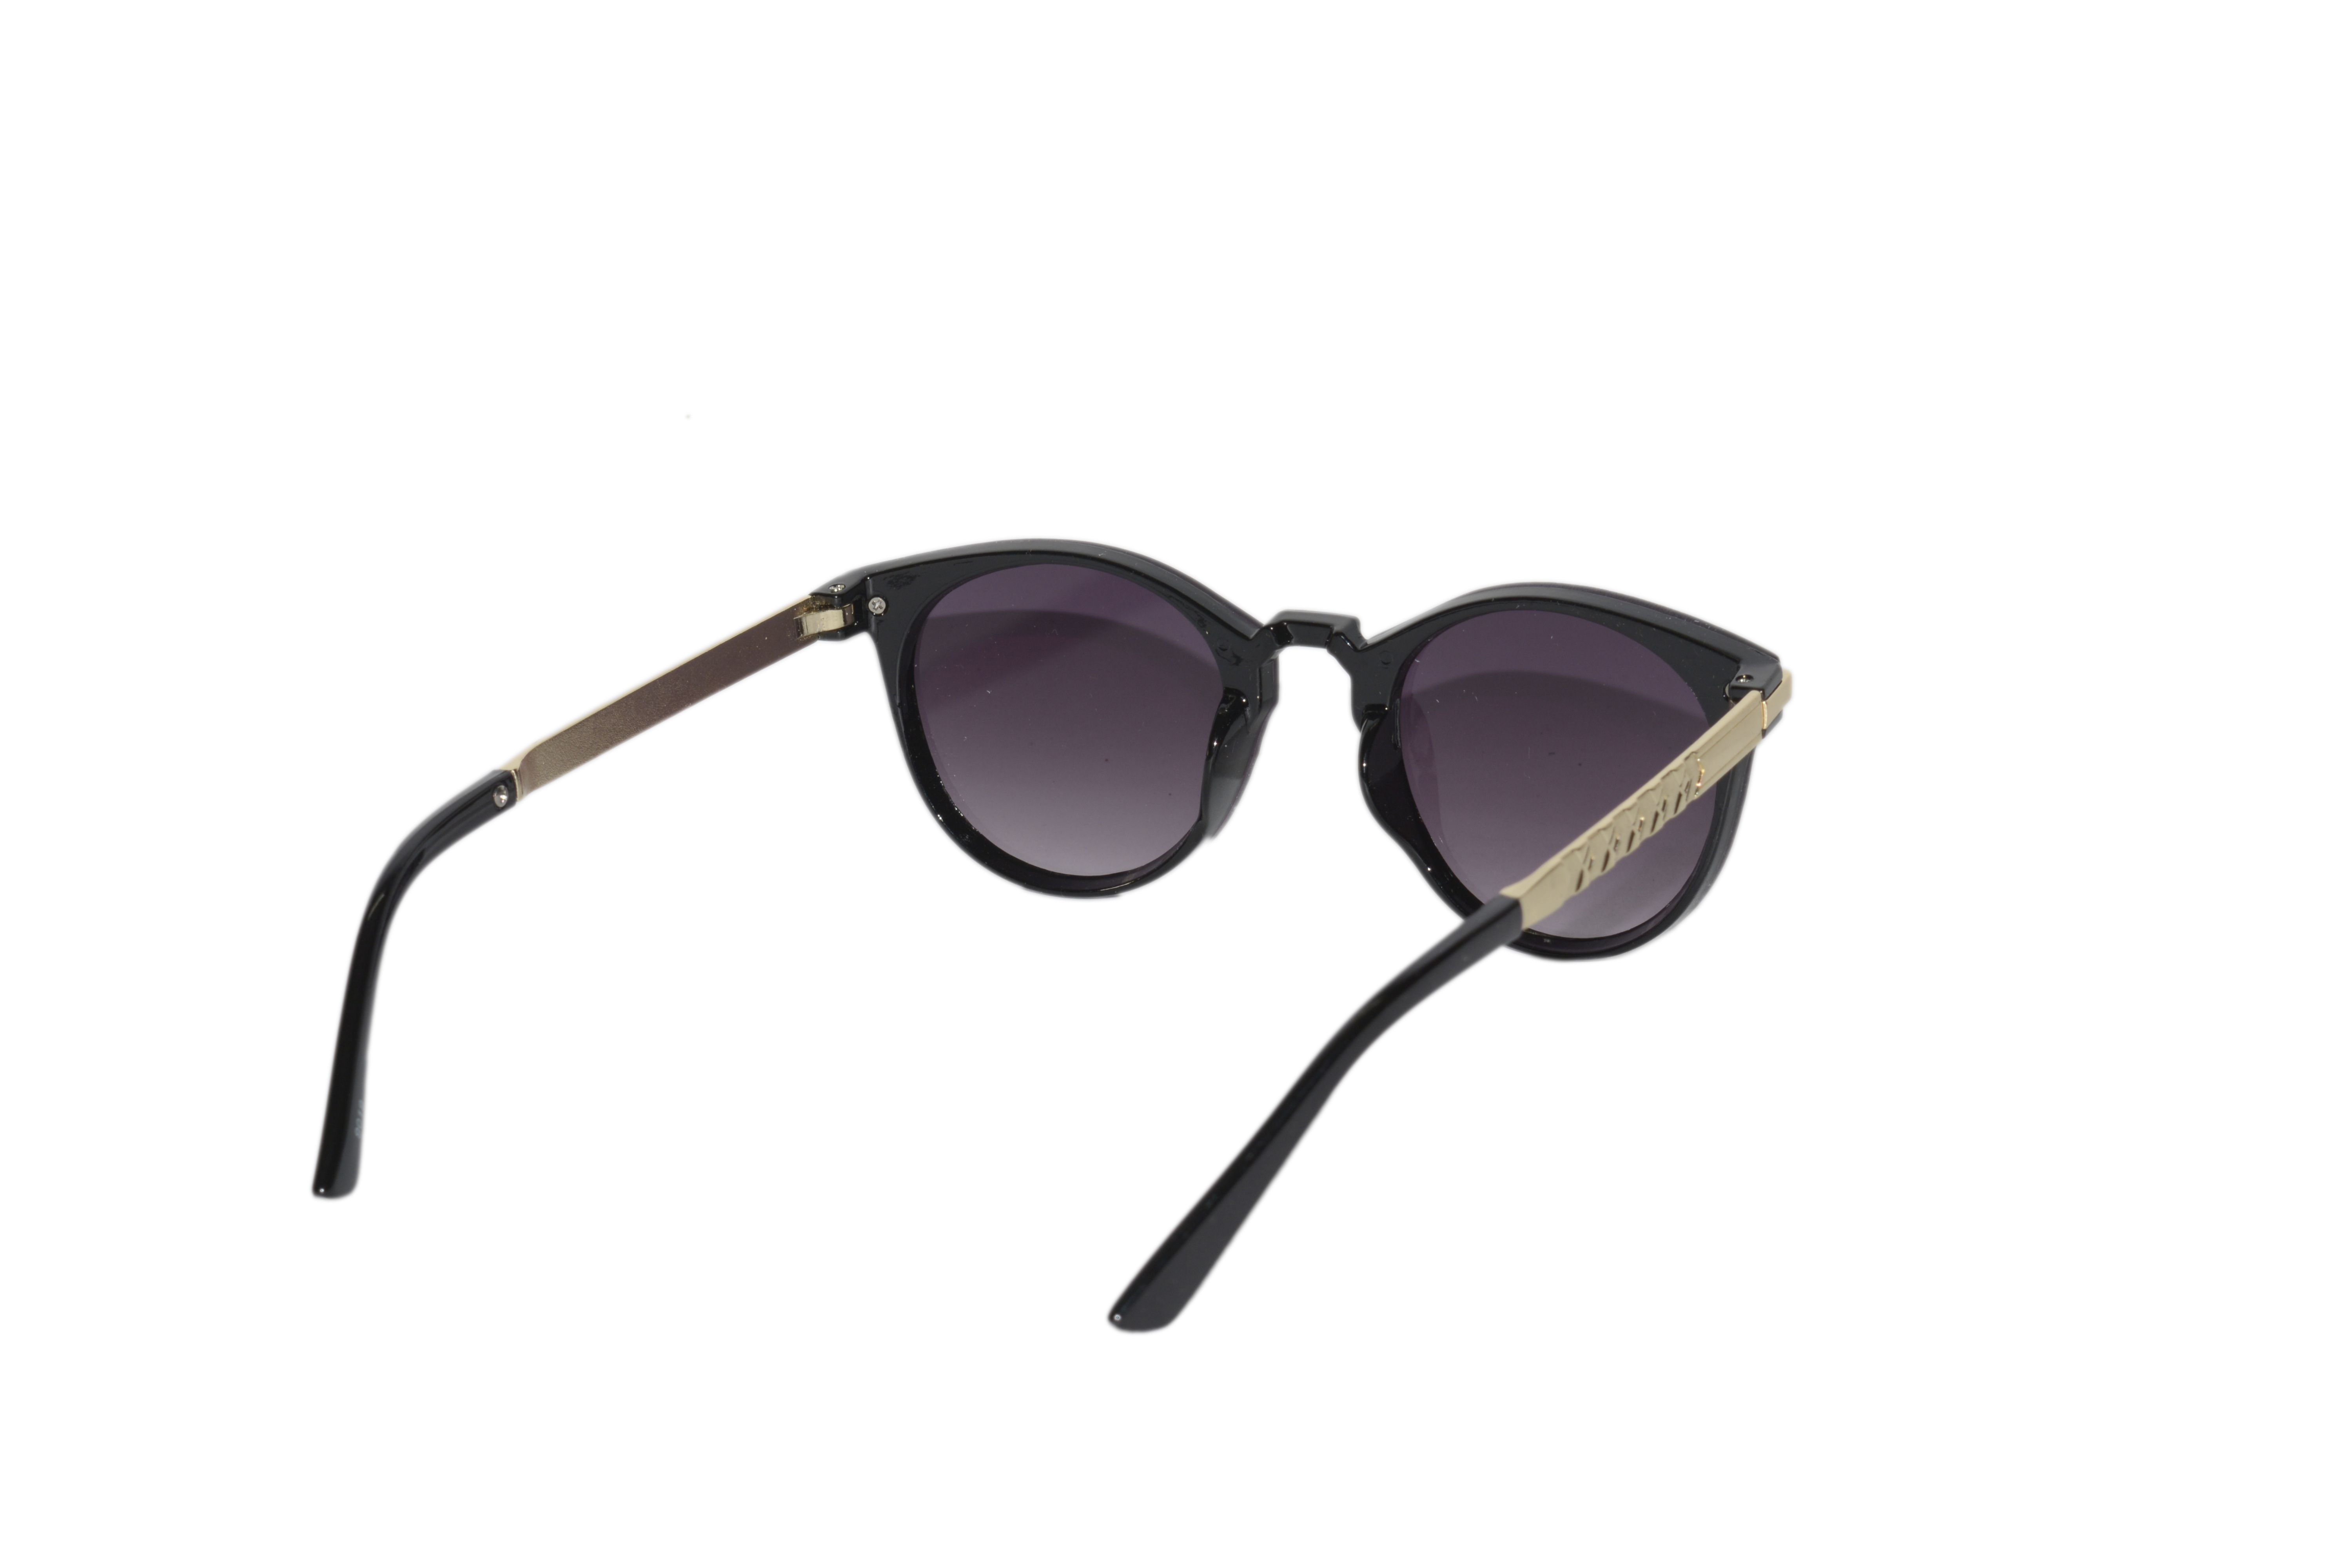 Peter Jones Black Round Sunglasses ( 9018B ) - Buy Peter Jones Black ...